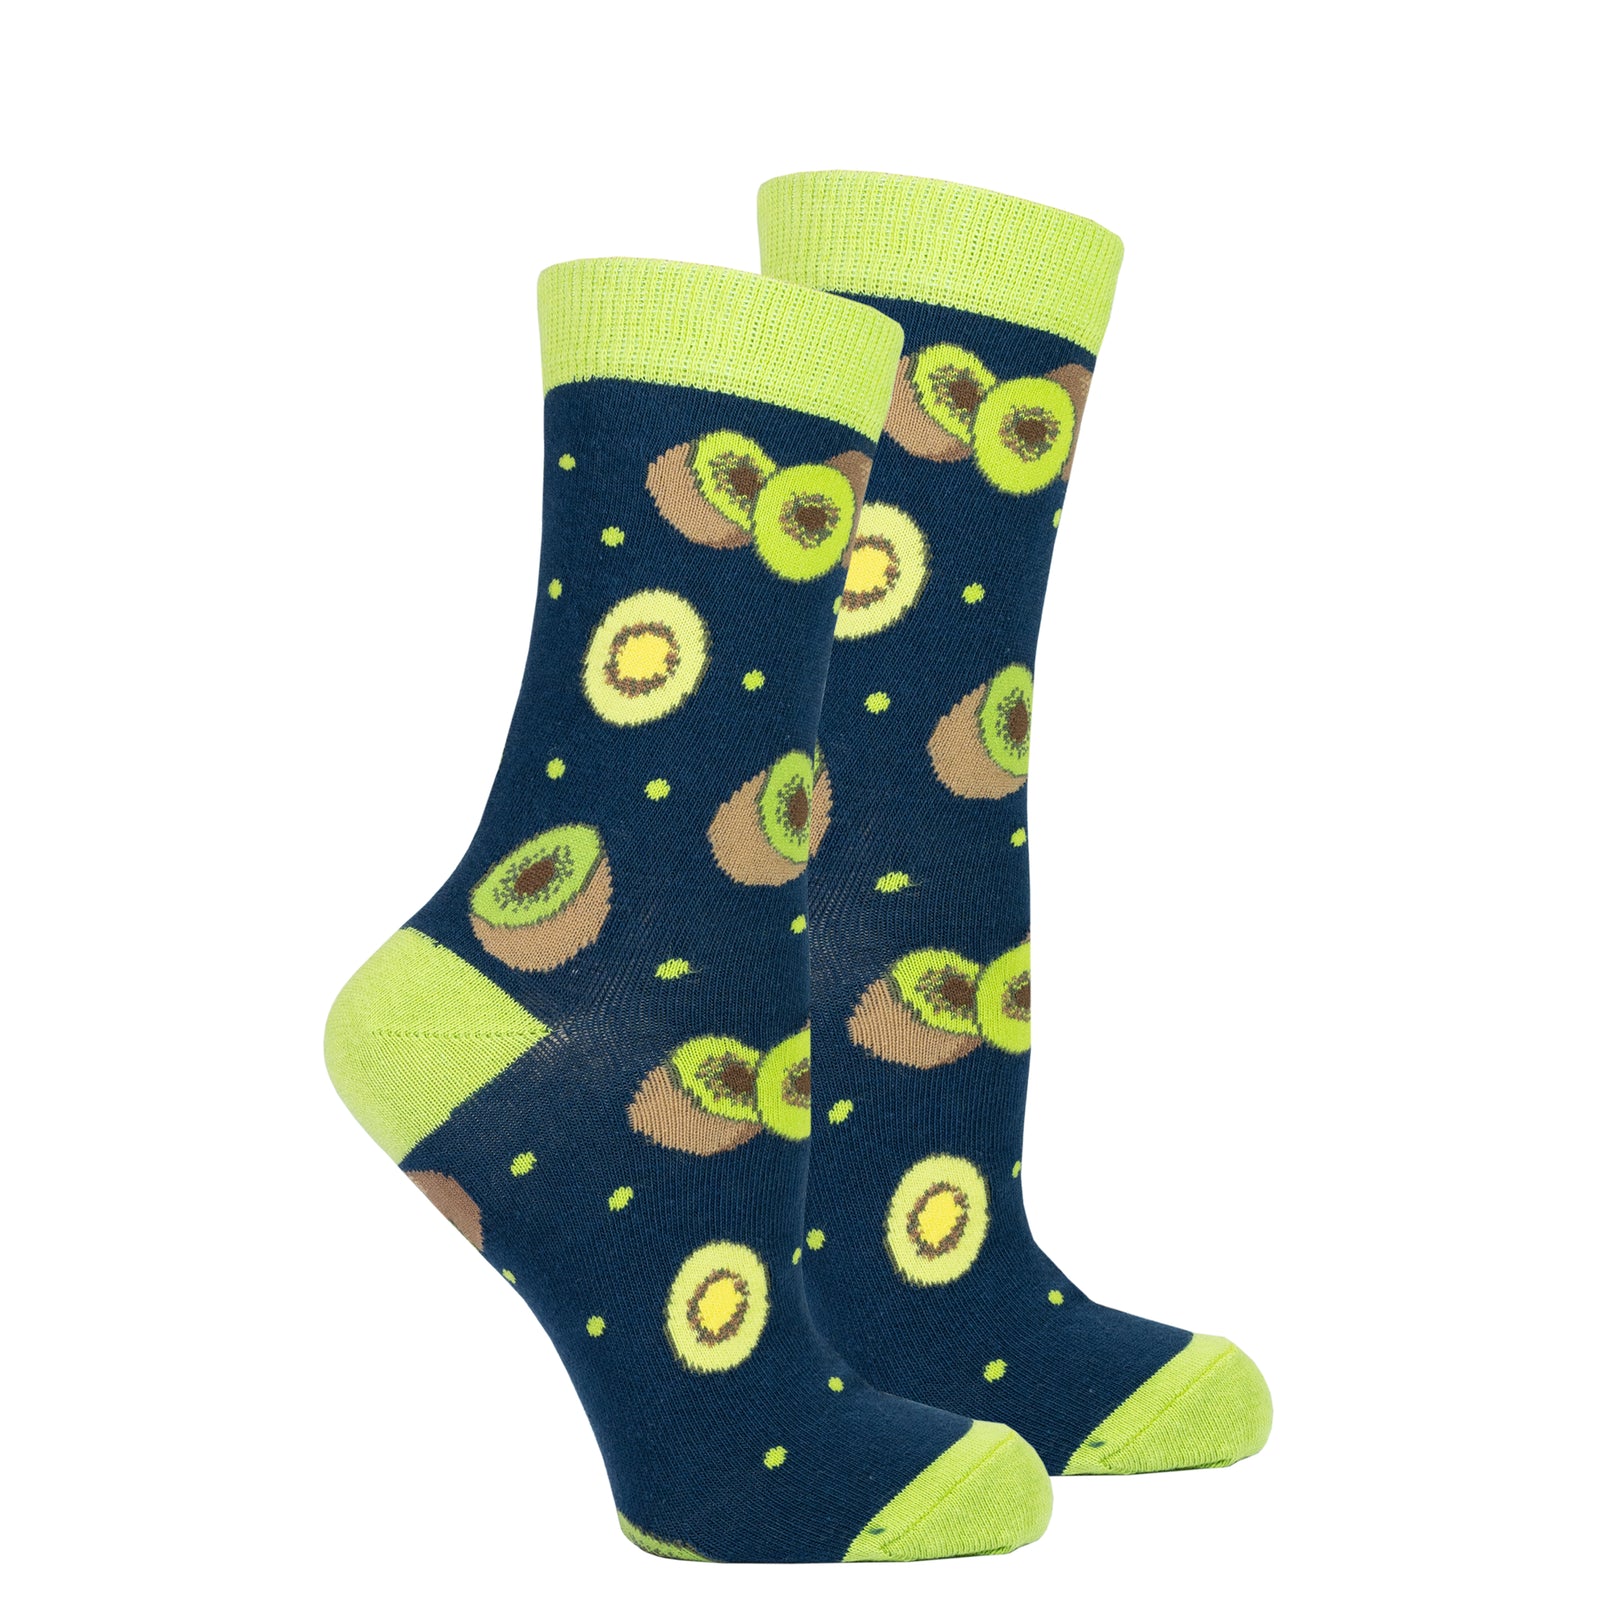 Women's Kiwi Socks - Socks n Socks